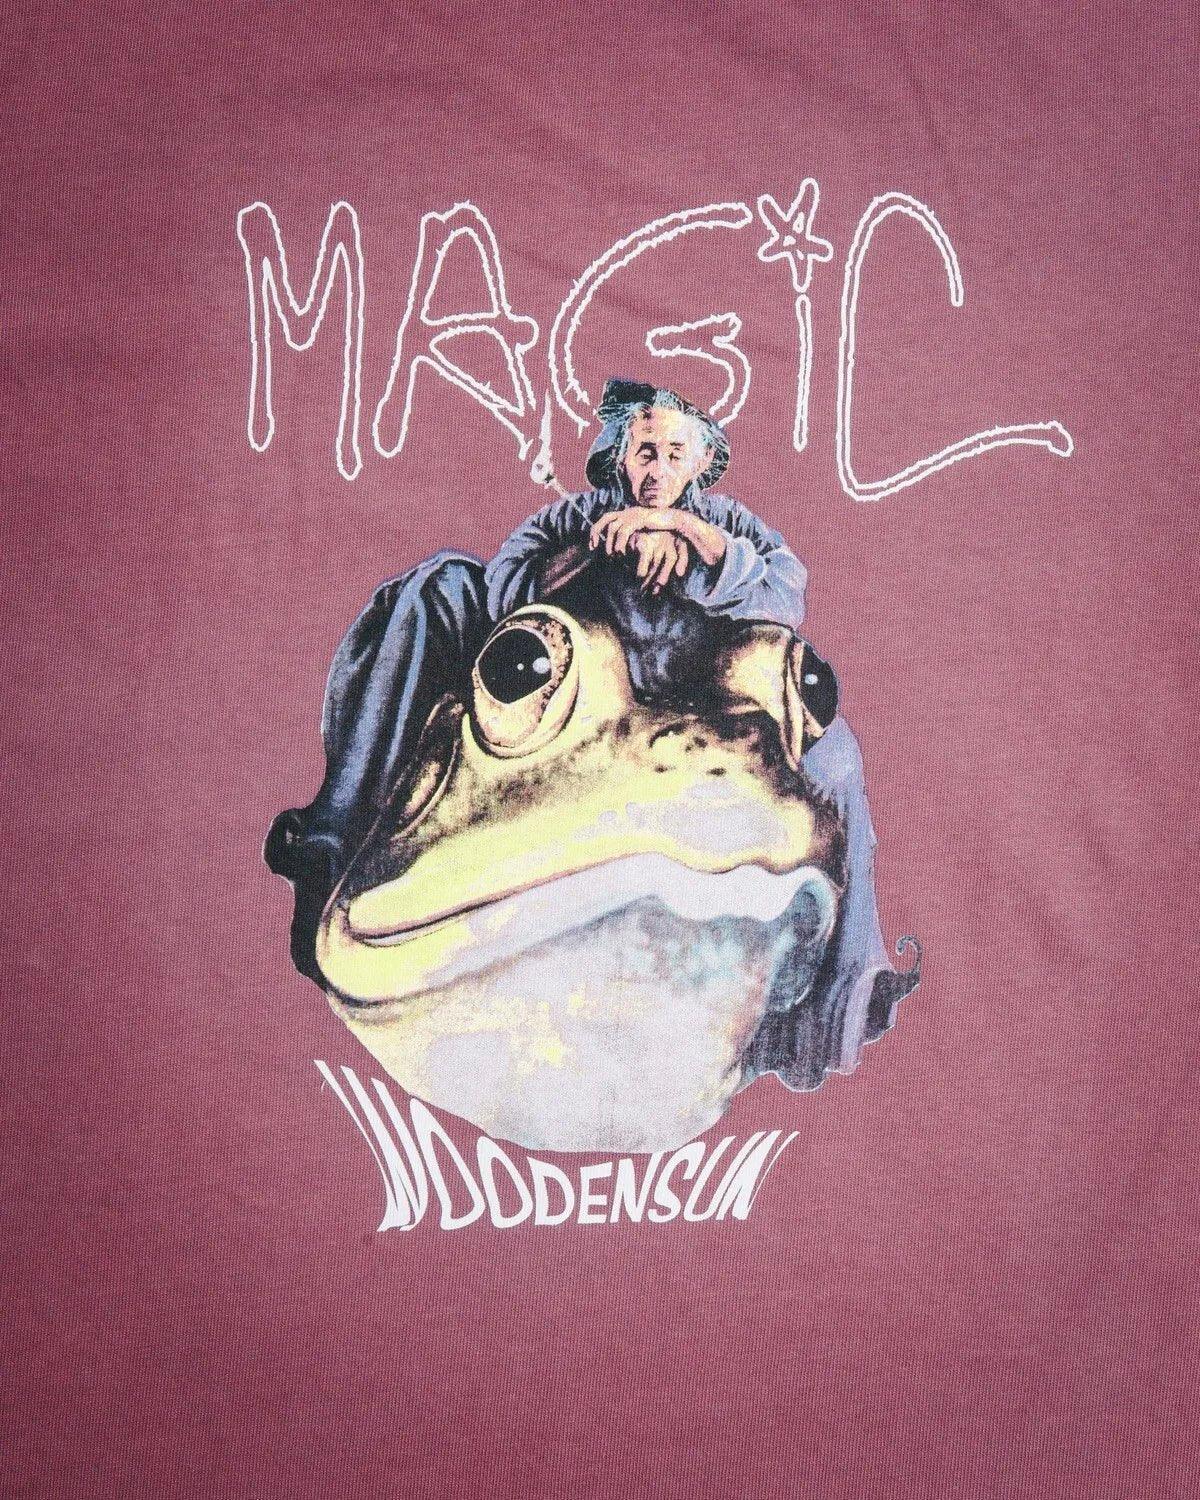 Woodensun Magic T-shirt / Violet Grey - SUPERCONSCIOUS BERLIN